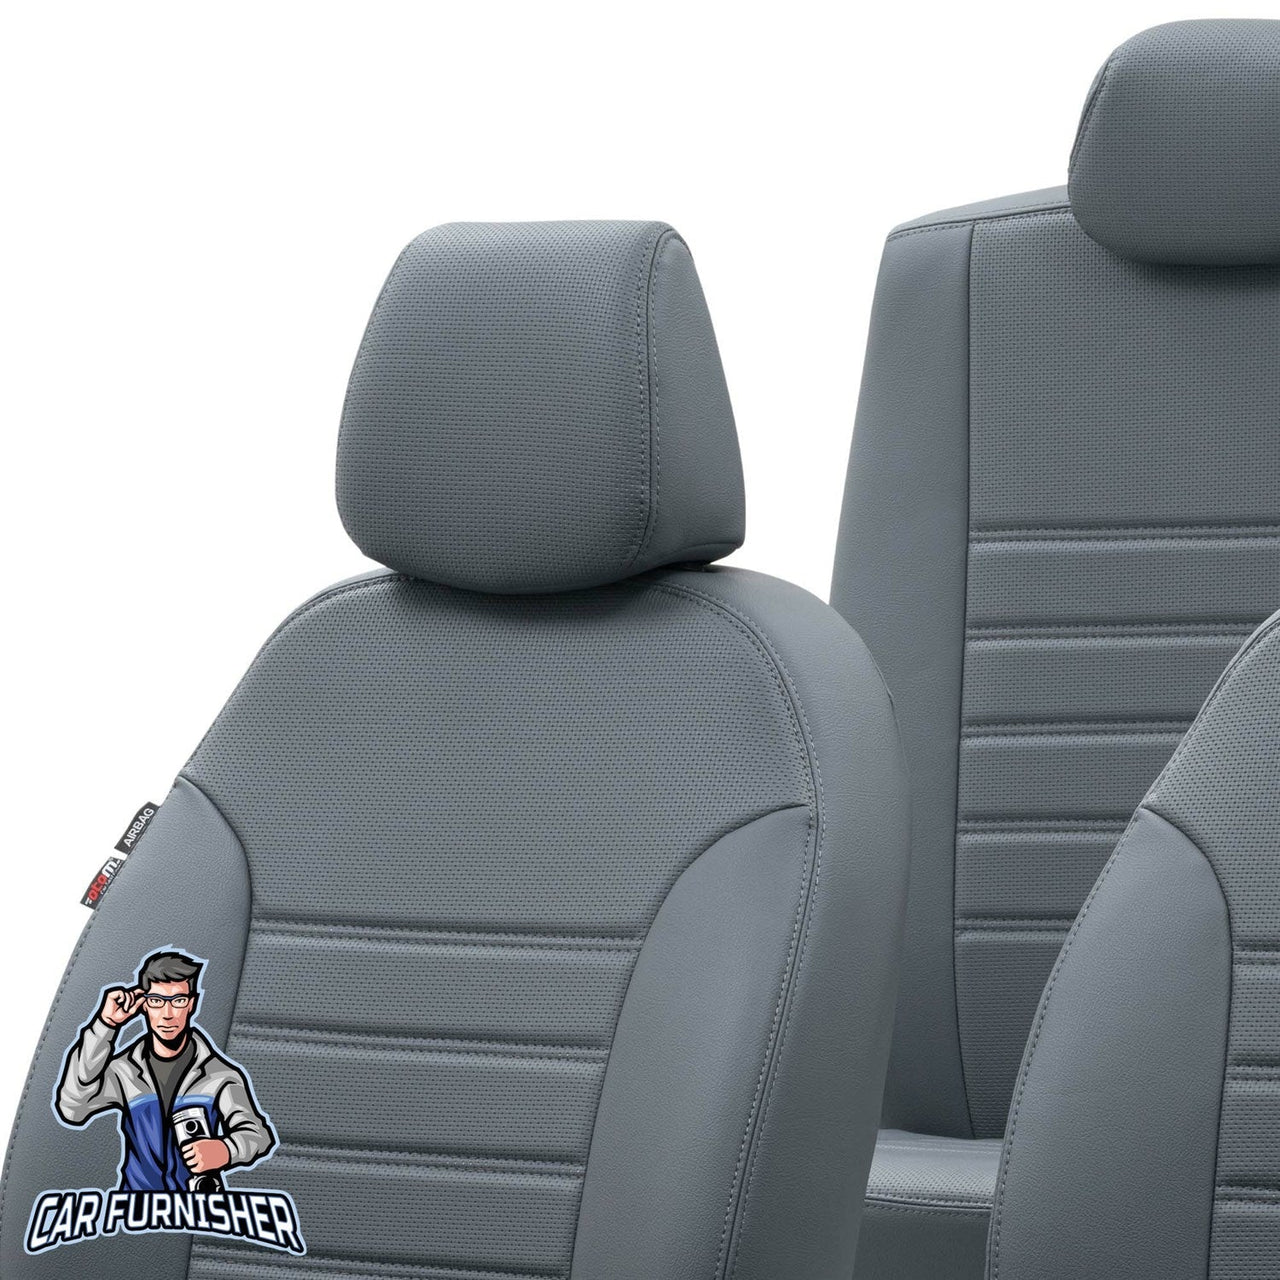 Skoda Octavia Seat Covers New York Leather Design Smoked Leather